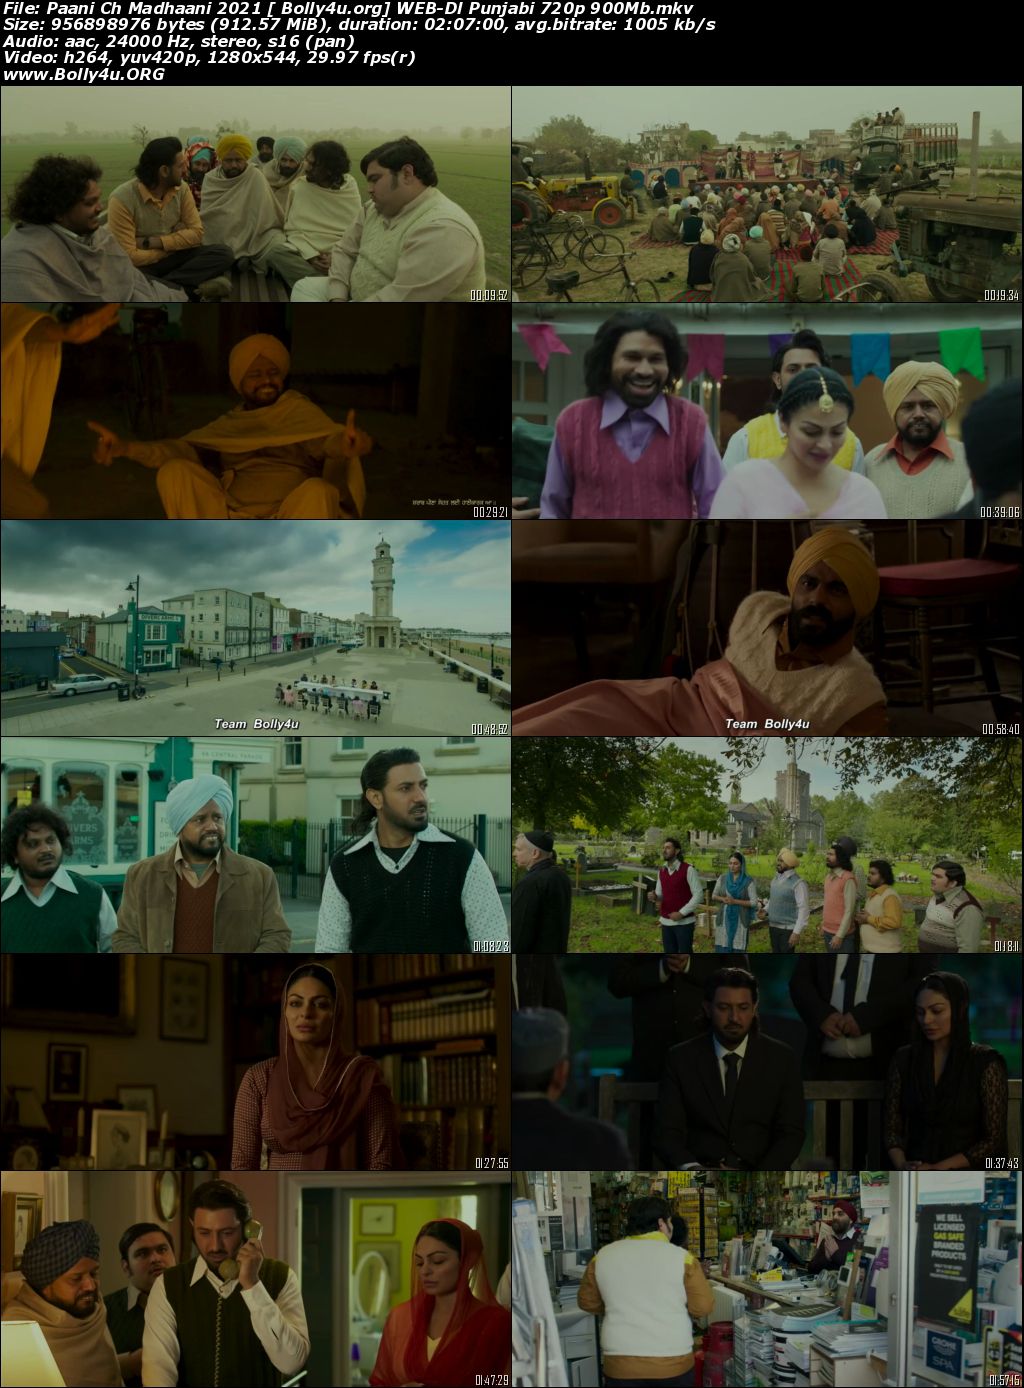 Paani Ch Madhaani 2021 WEB-DL 400MB Punjabi Movie Download 480p